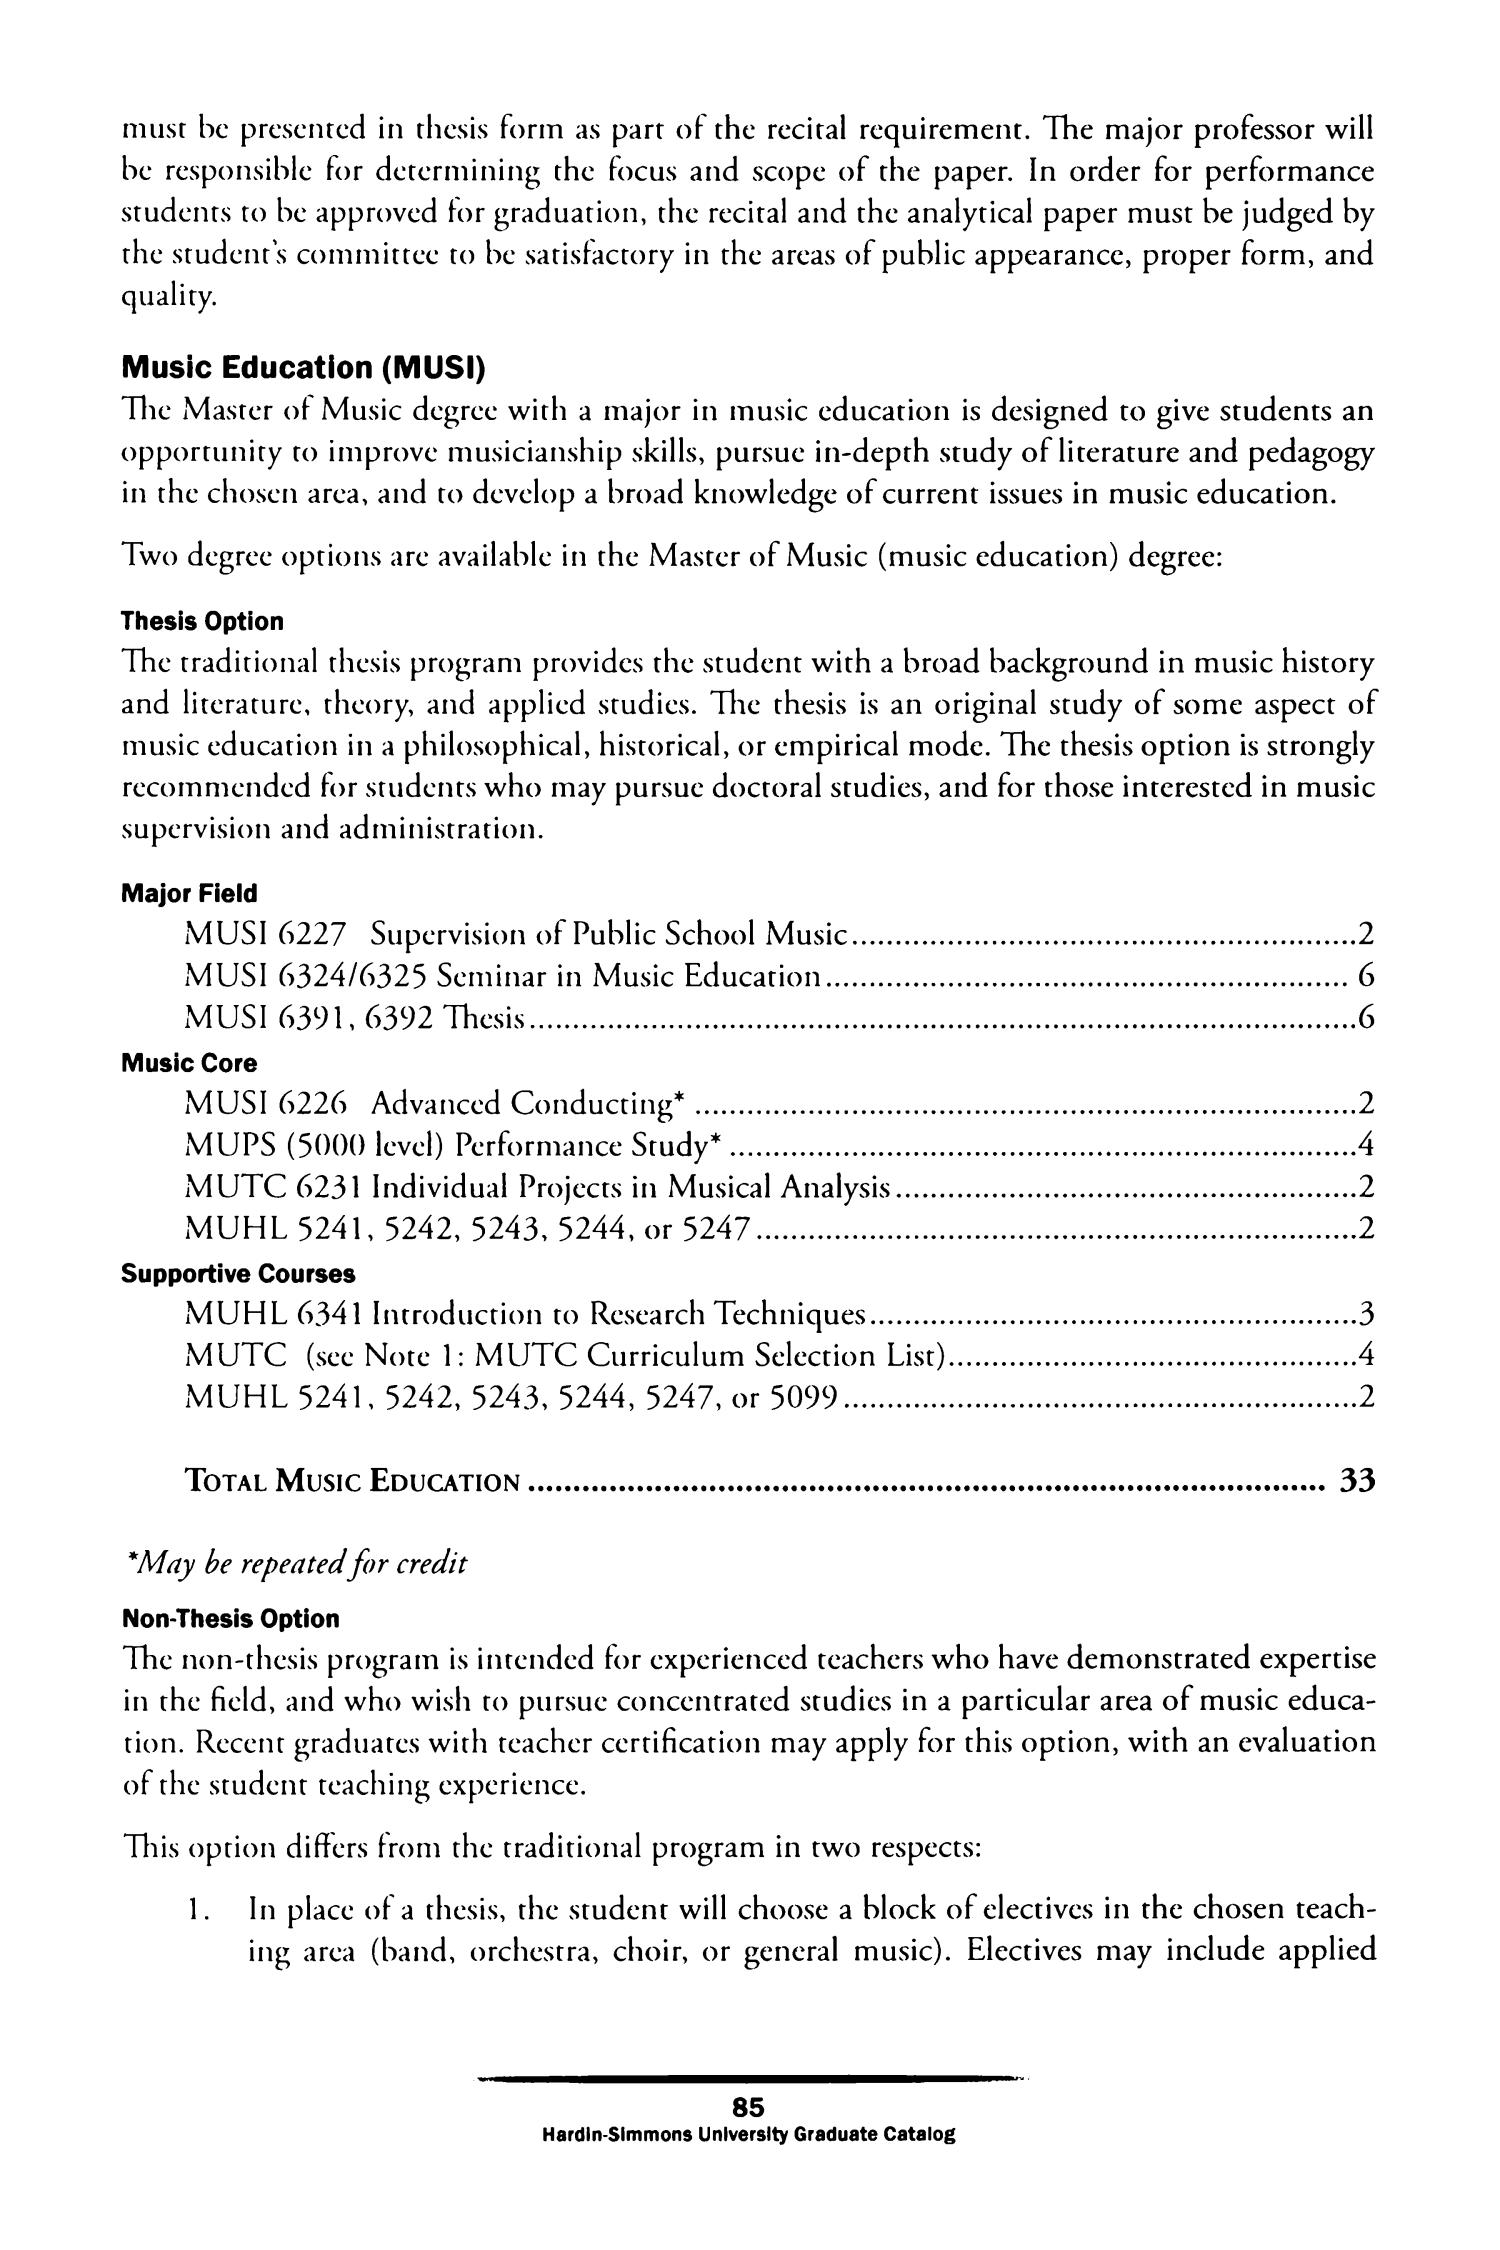 Catalog of Hardin-Simmons University, 2008-2009 Graduate Bulletin
                                                
                                                    85
                                                